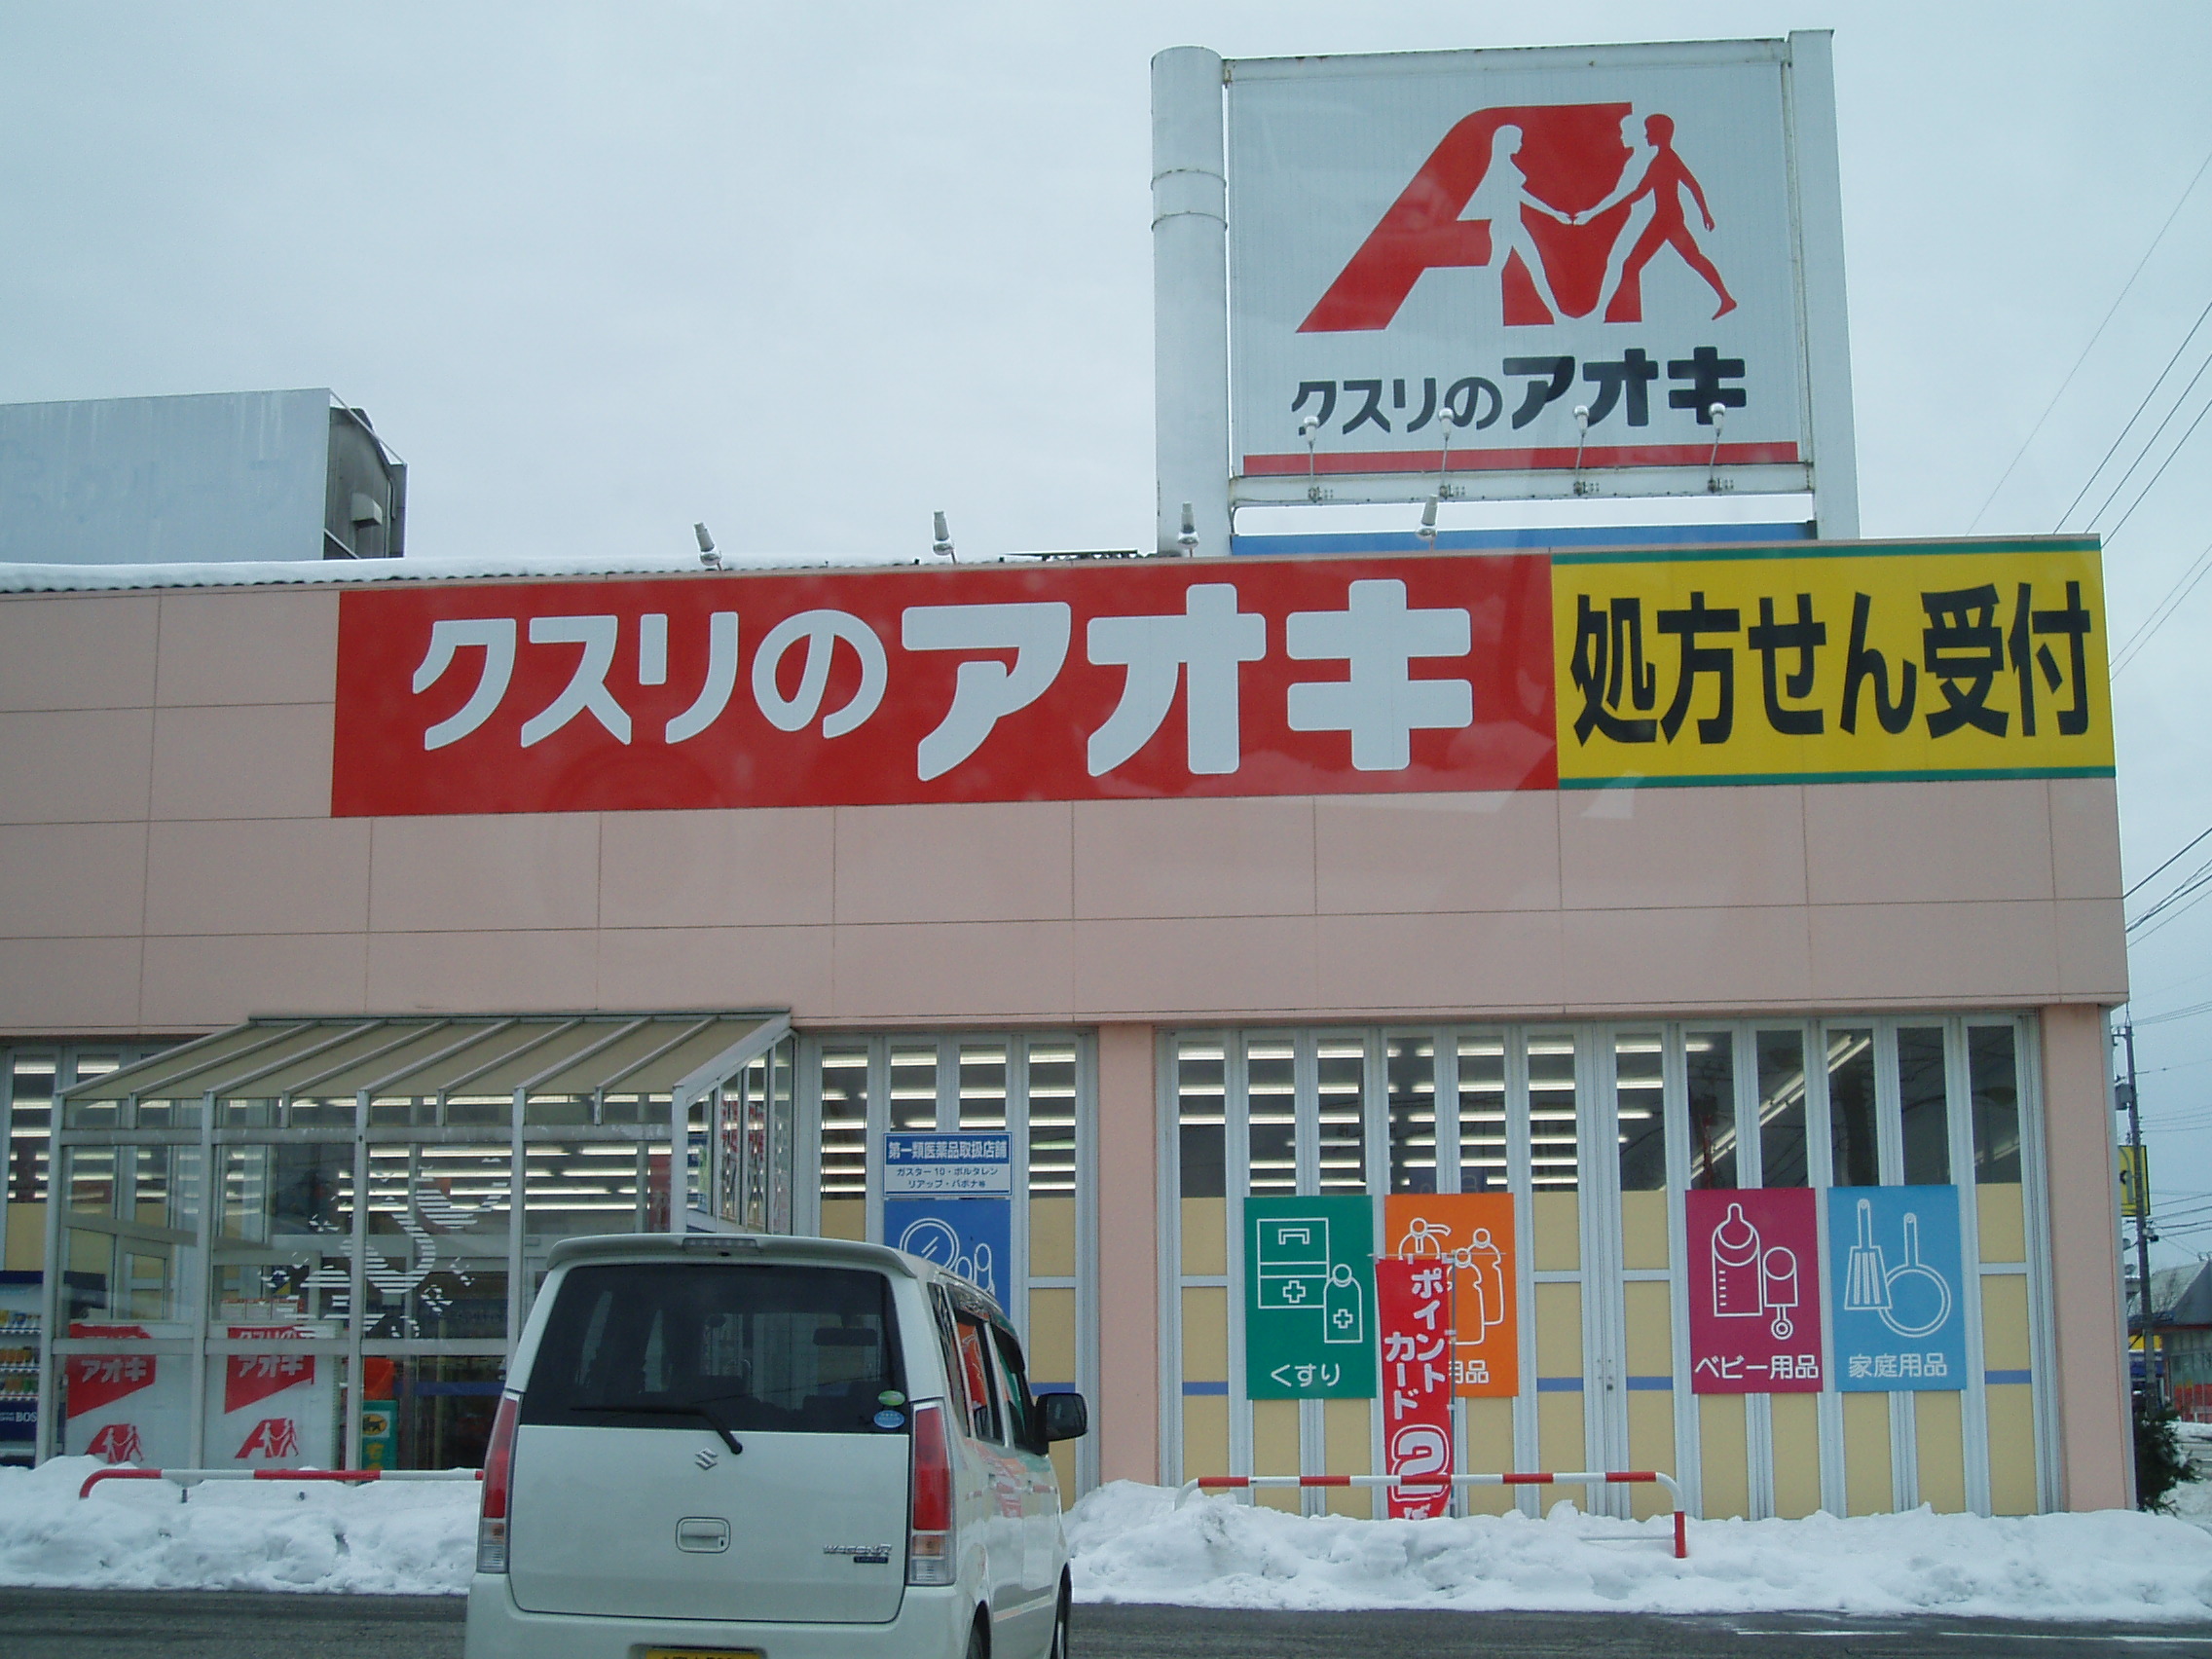 Dorakkusutoa. Medicine of Aoki Nomura shop 915m until (drugstore)